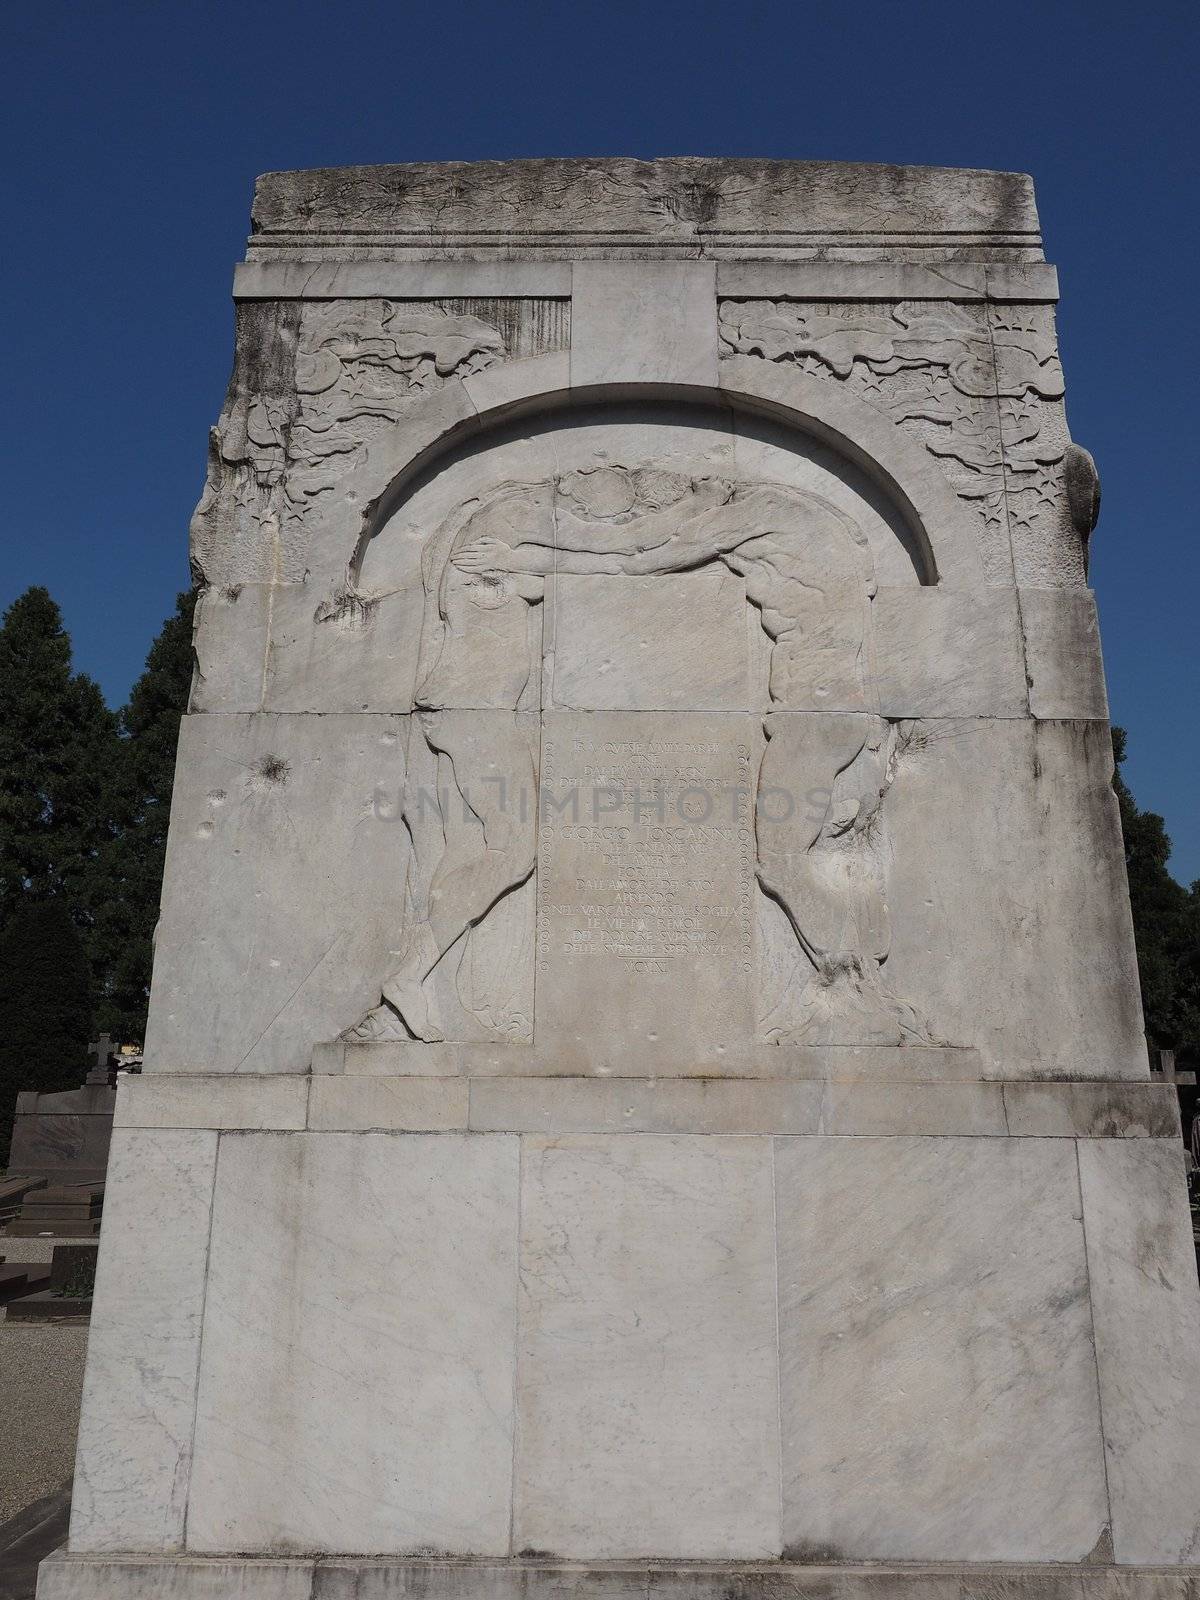 Toscanini grave at Cimitero Monumentale (Monumental Cemetery) in Milan by claudiodivizia